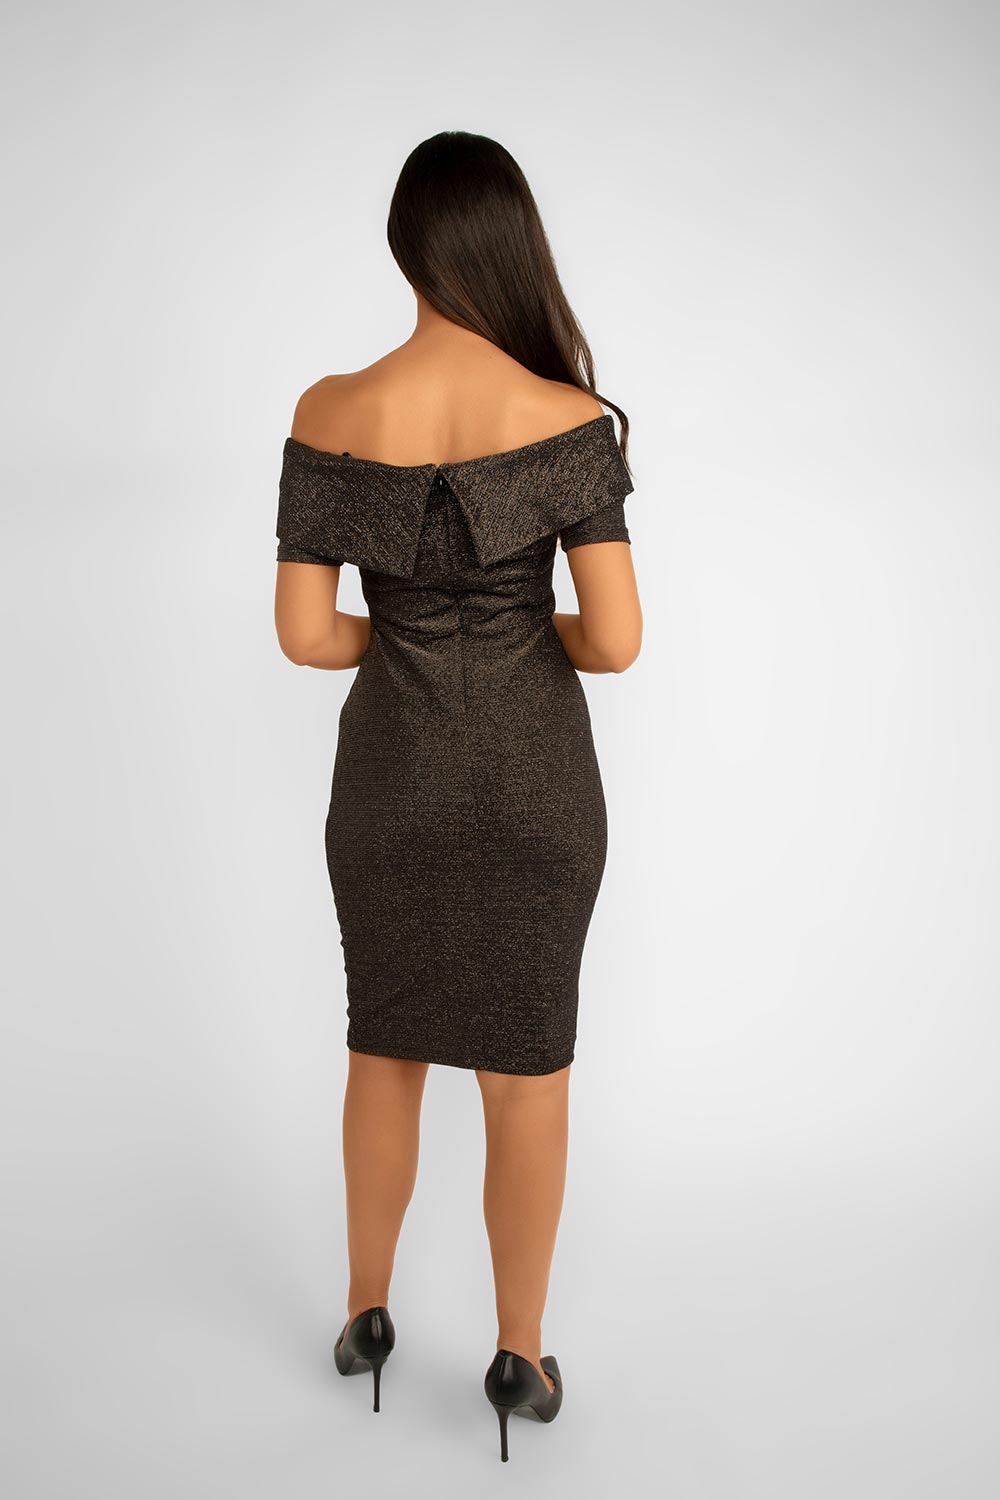 Women's Clothing FRANK LYMAN (234303) Off The Shoulder Sparkle Dress in BLACK